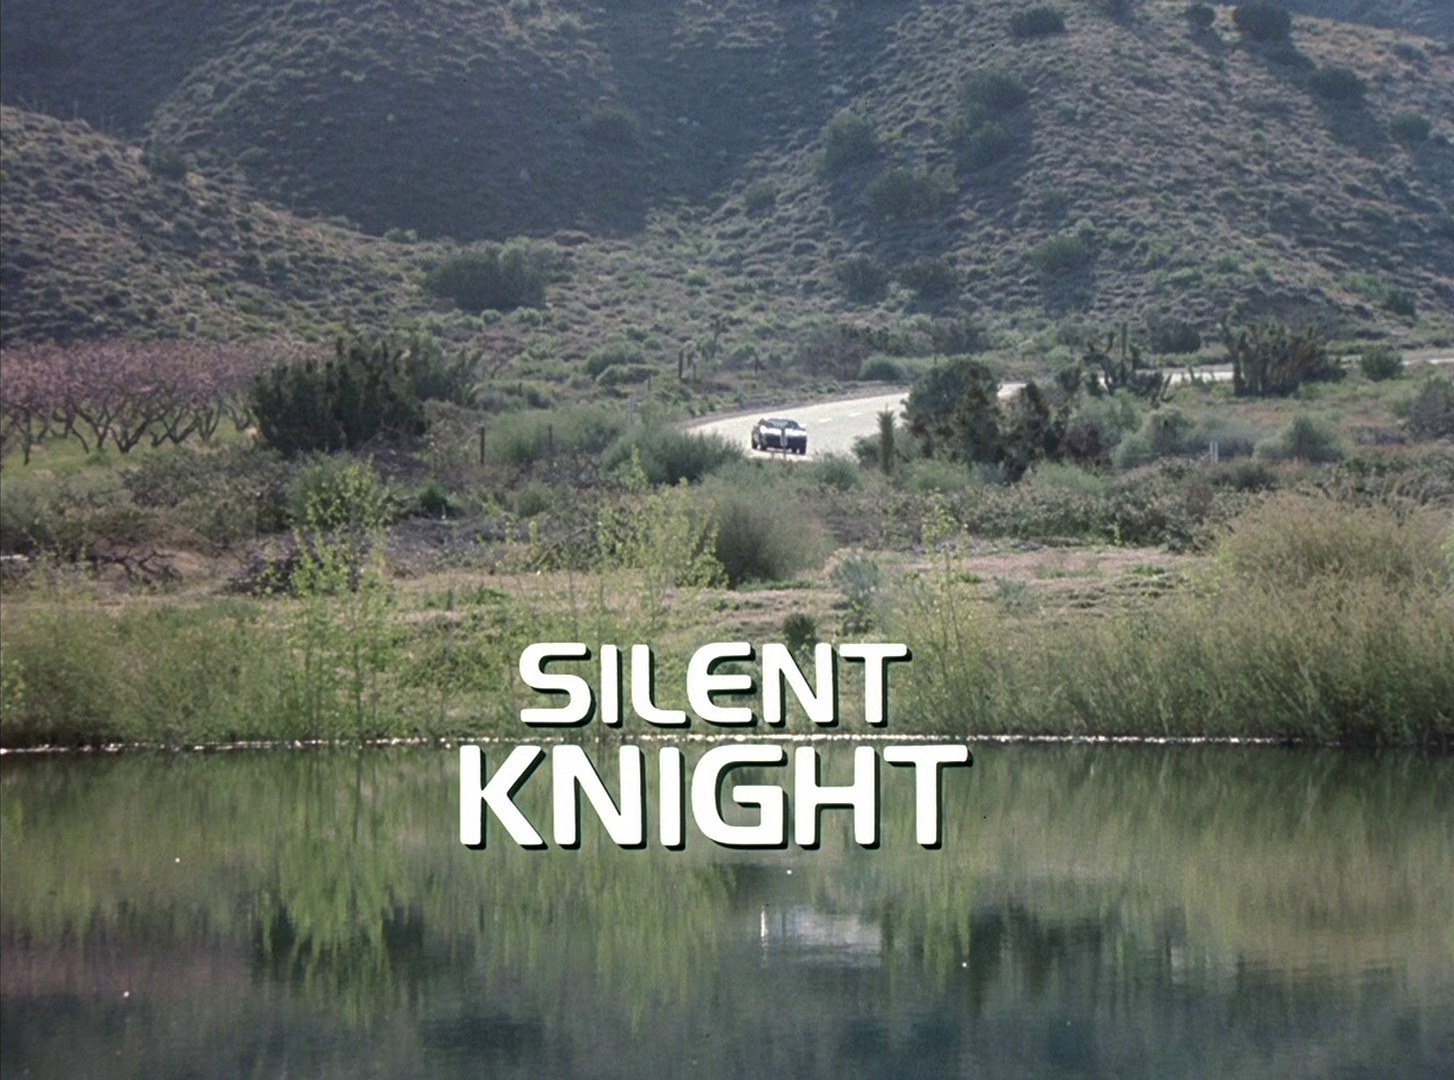 Knight Rider Season 2 - Episode 32 - Silent Knight - Photo 1